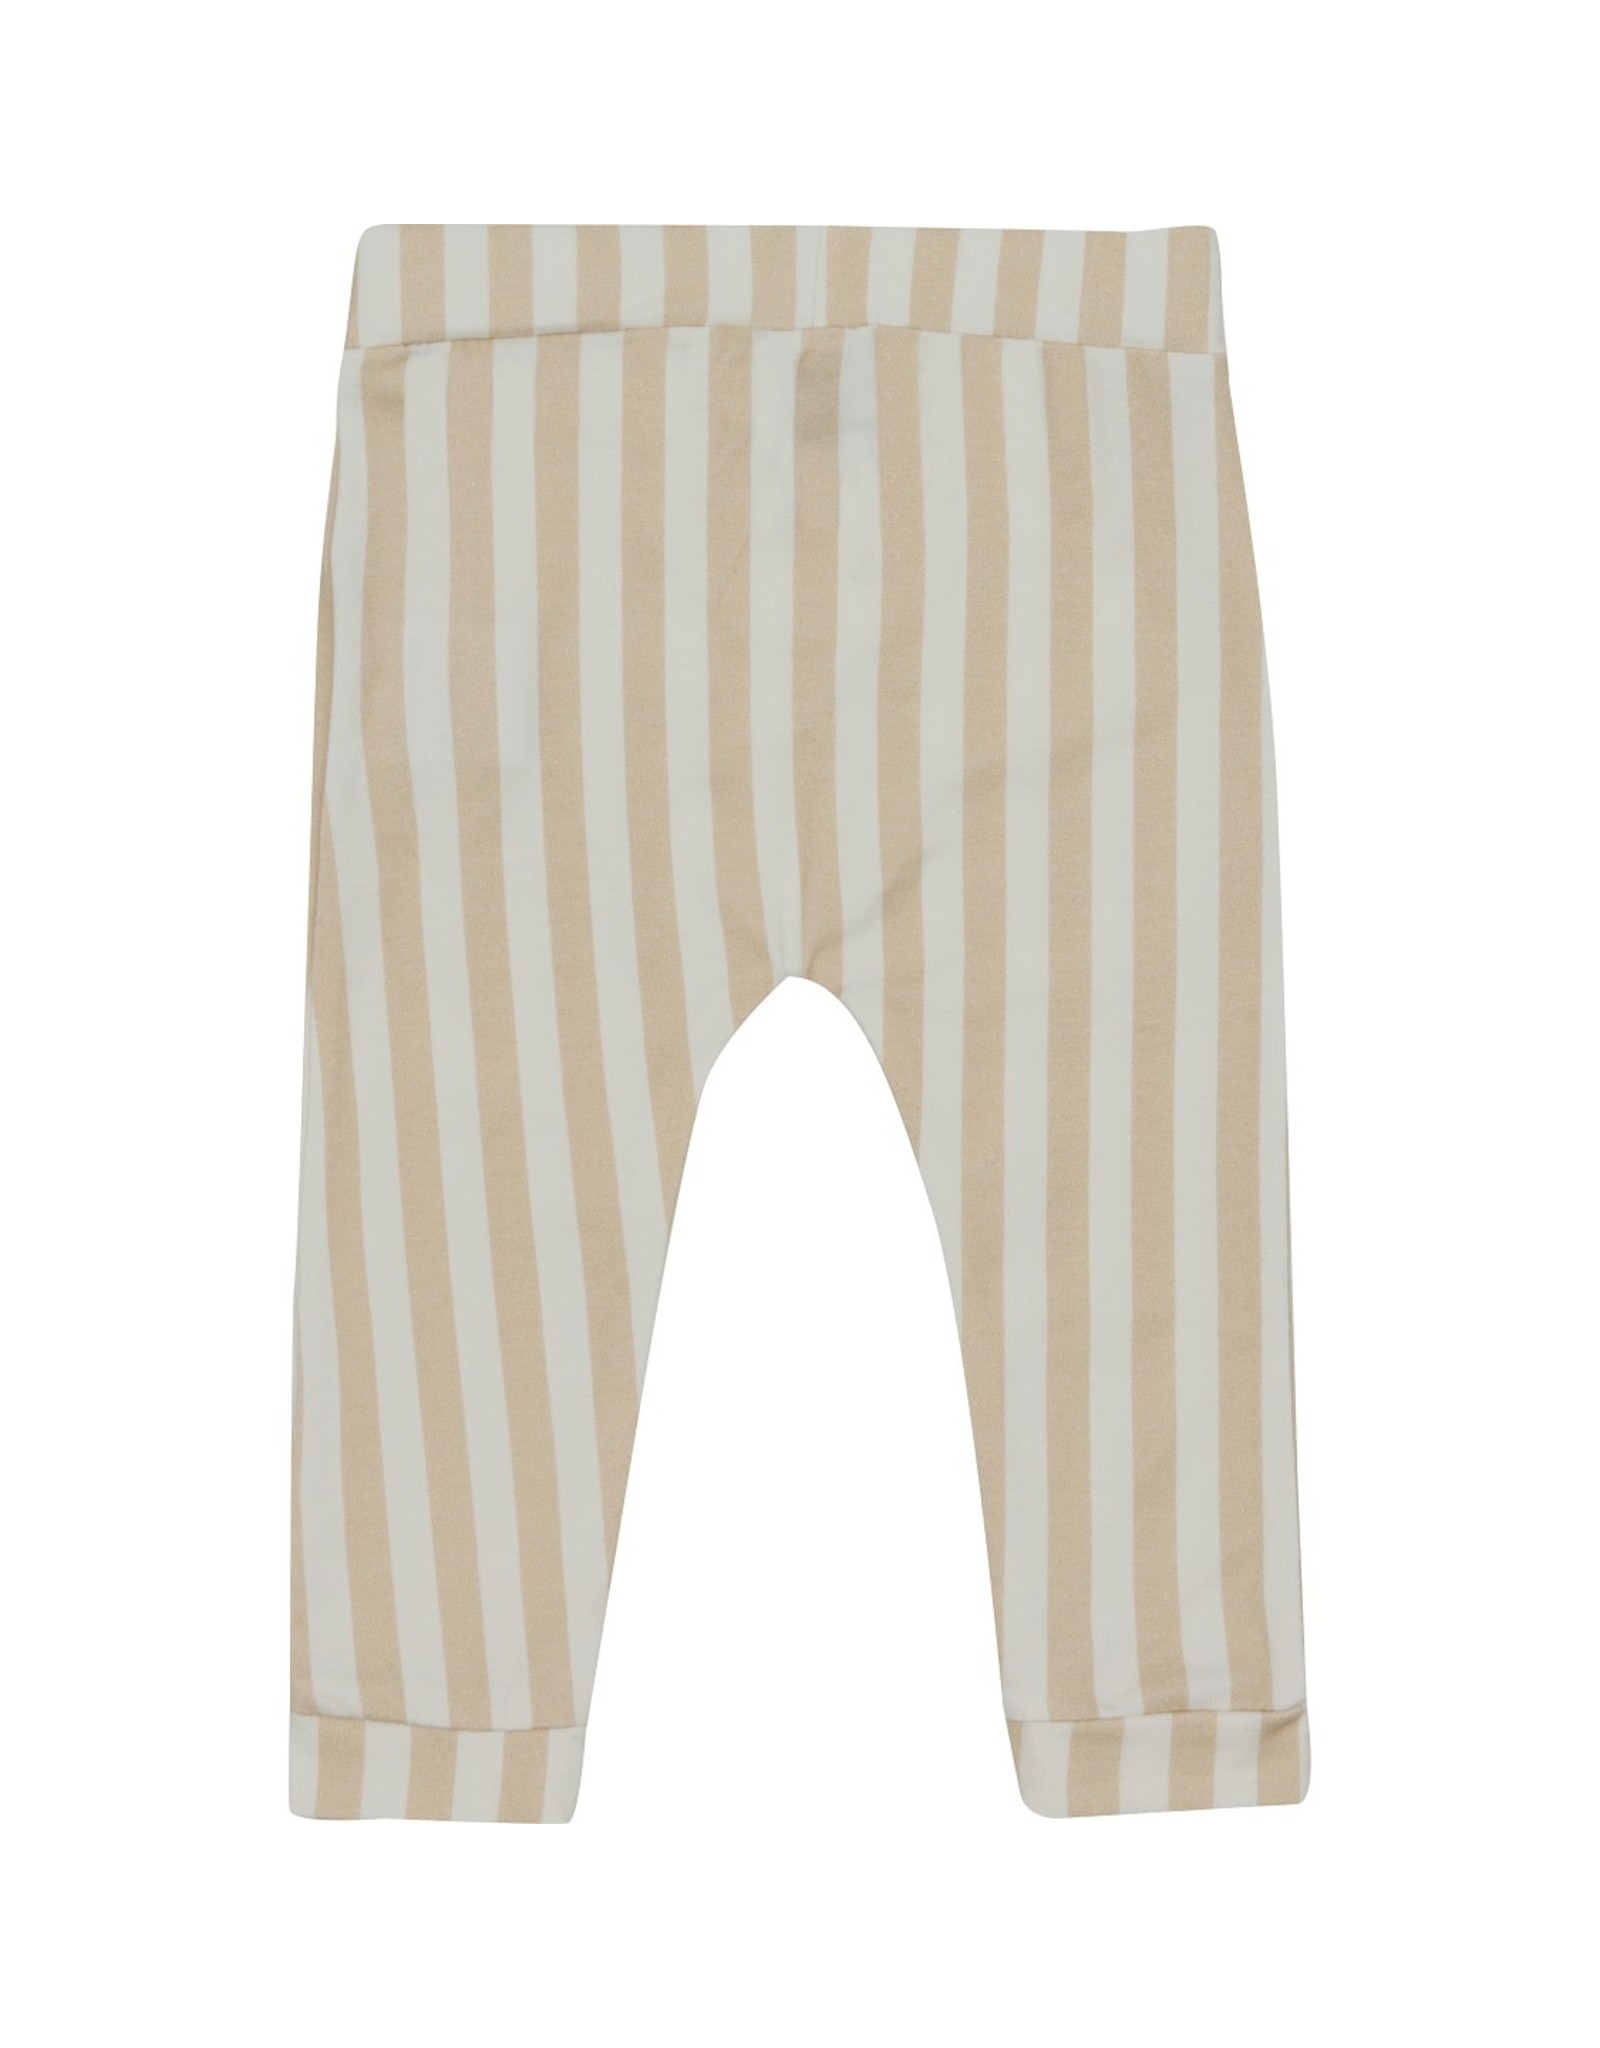 Klein Trouser Stripe Beige/offWhite